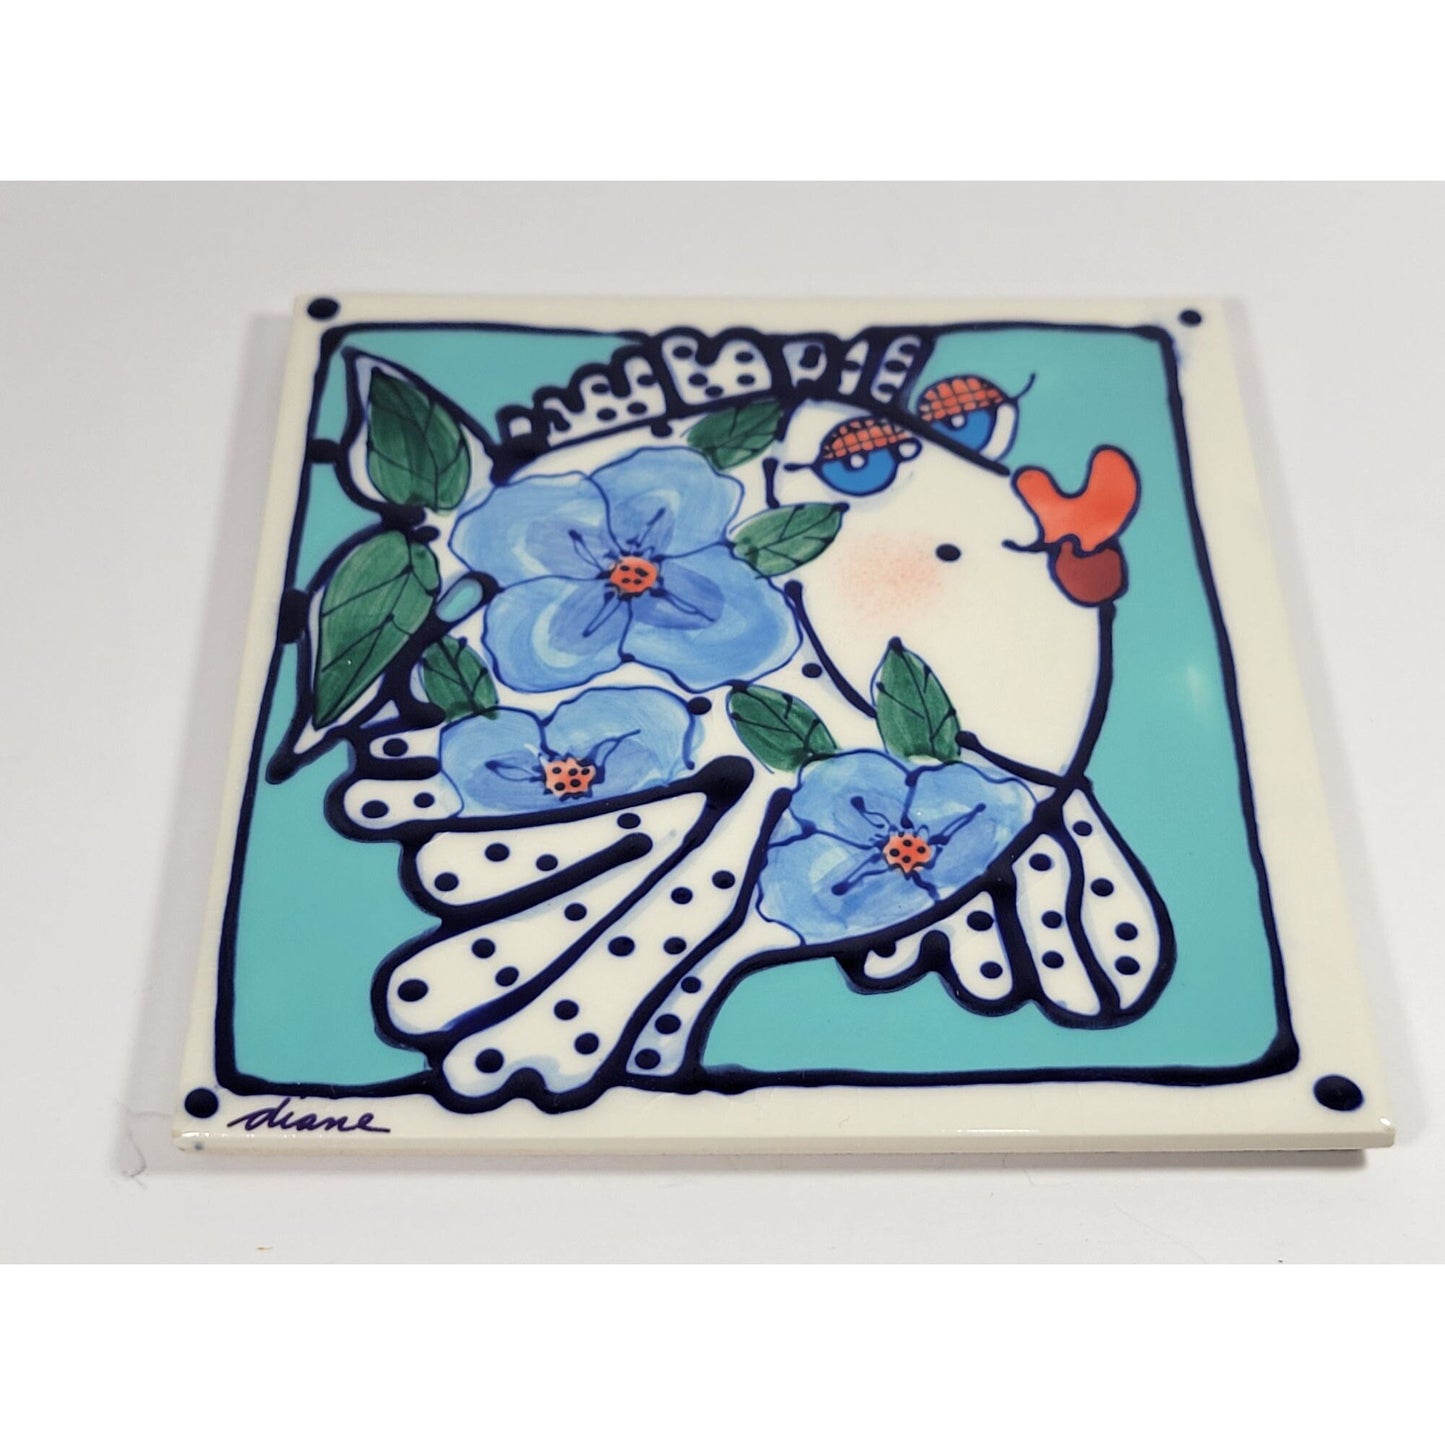 Wall Tile/Trivet-Flower Fish-Blue "Tina" - By Diane Artware